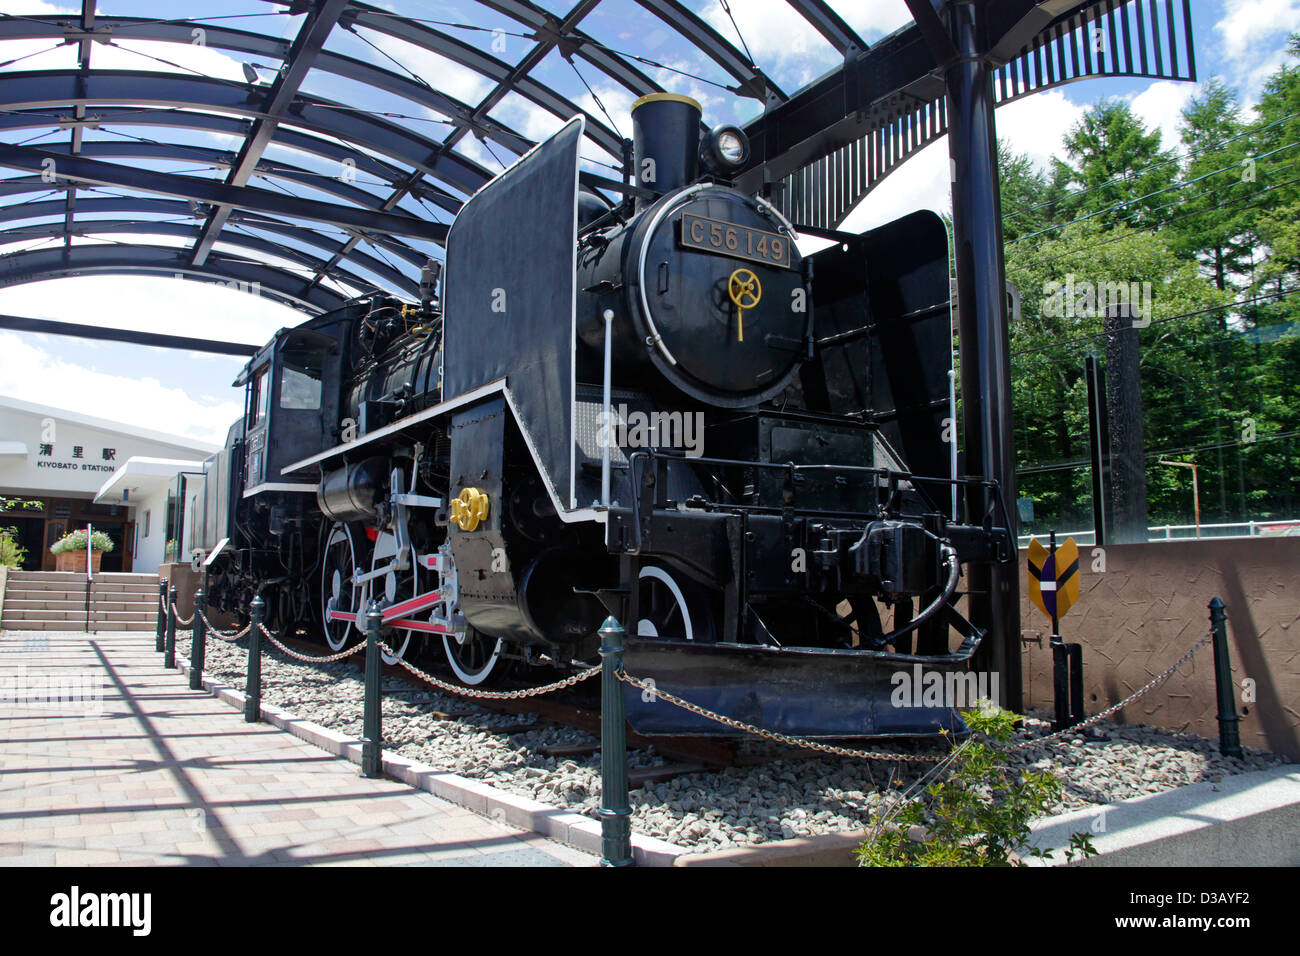 Jnr Class C56 Steam Locomotive Displayed At Kiyosato Railway Station Stock Photo Alamy